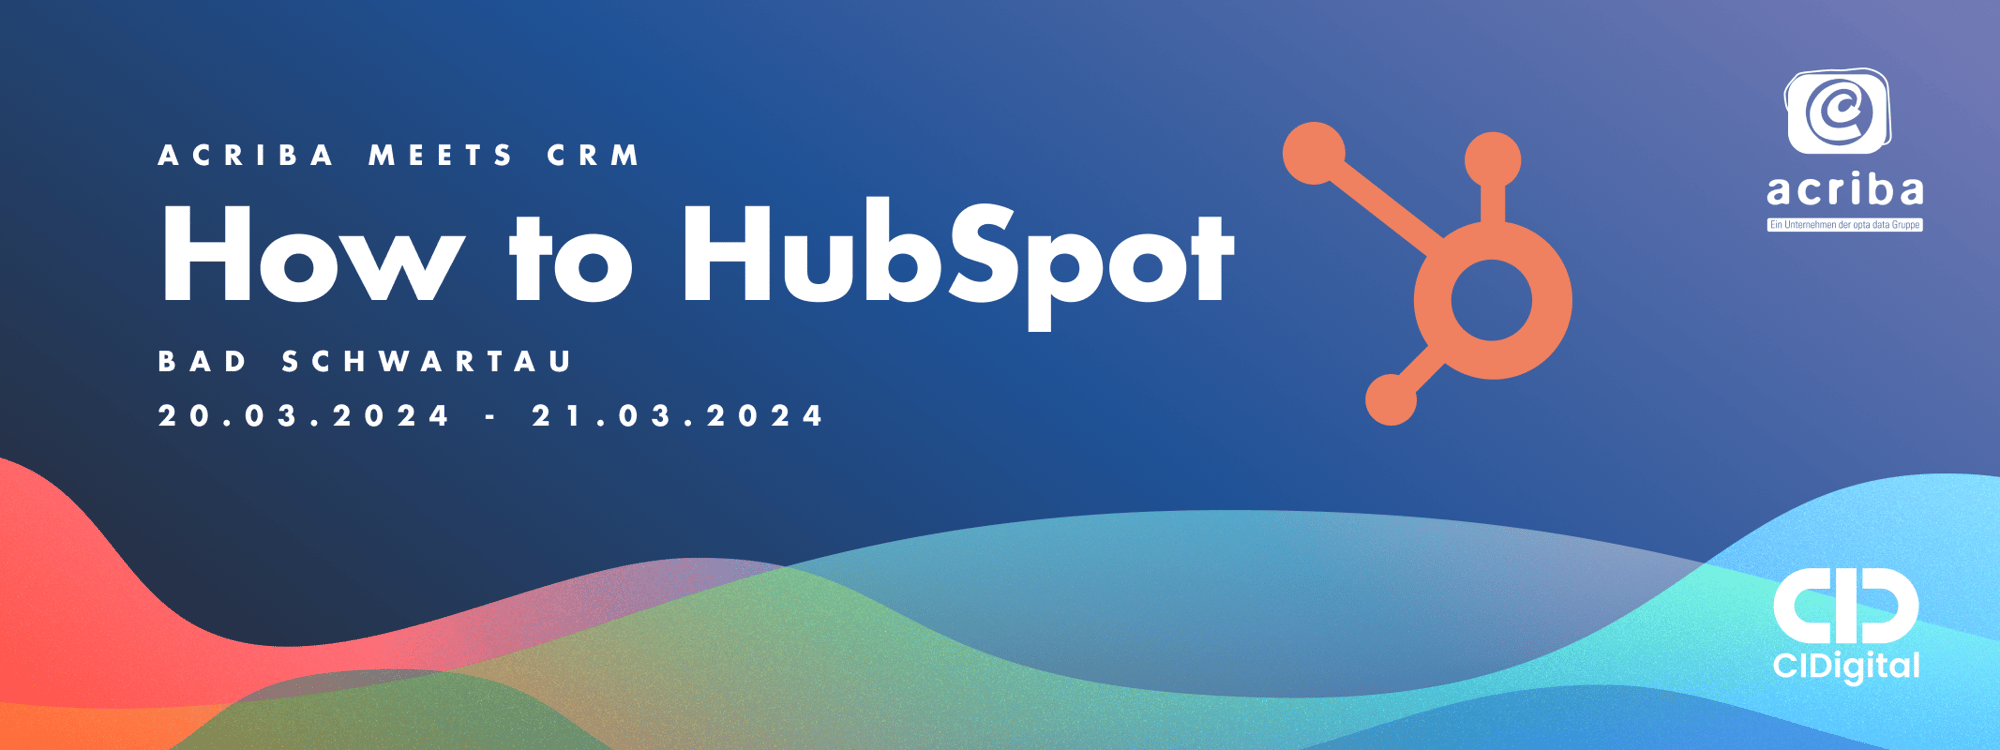 hubspot-header-final-logo-schmal